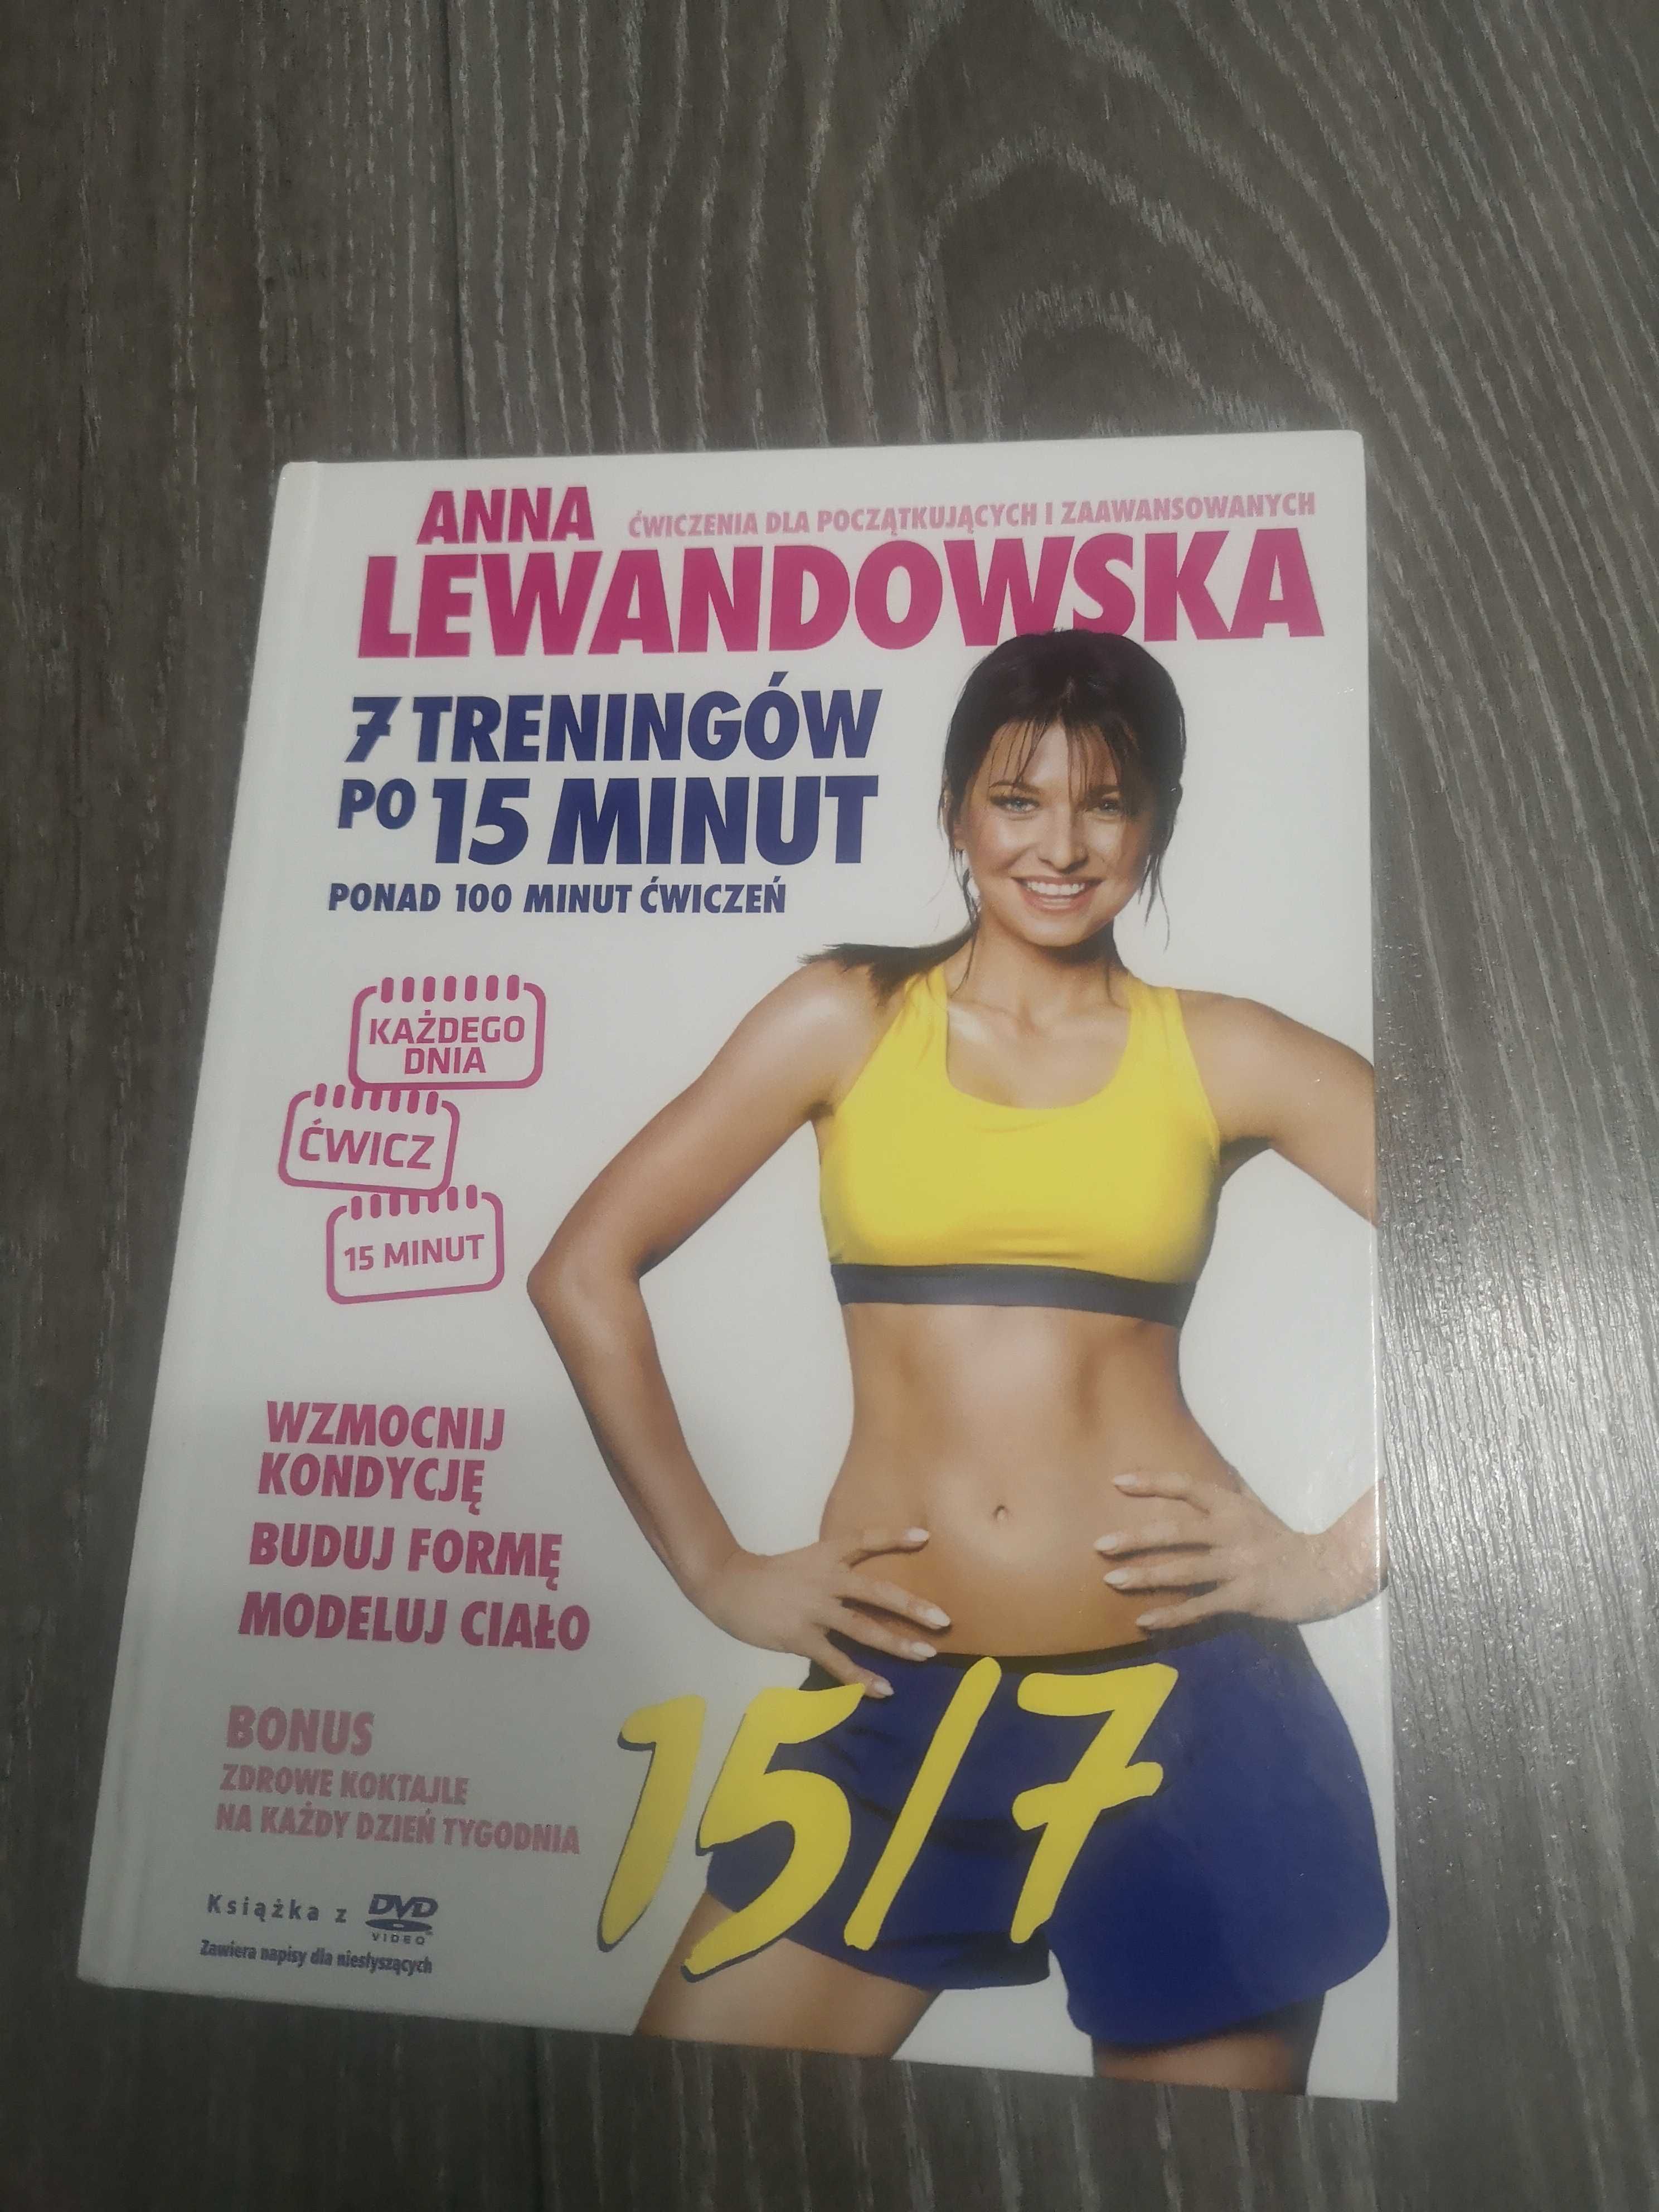 7 treningów po 15 minut A.Lewandowska